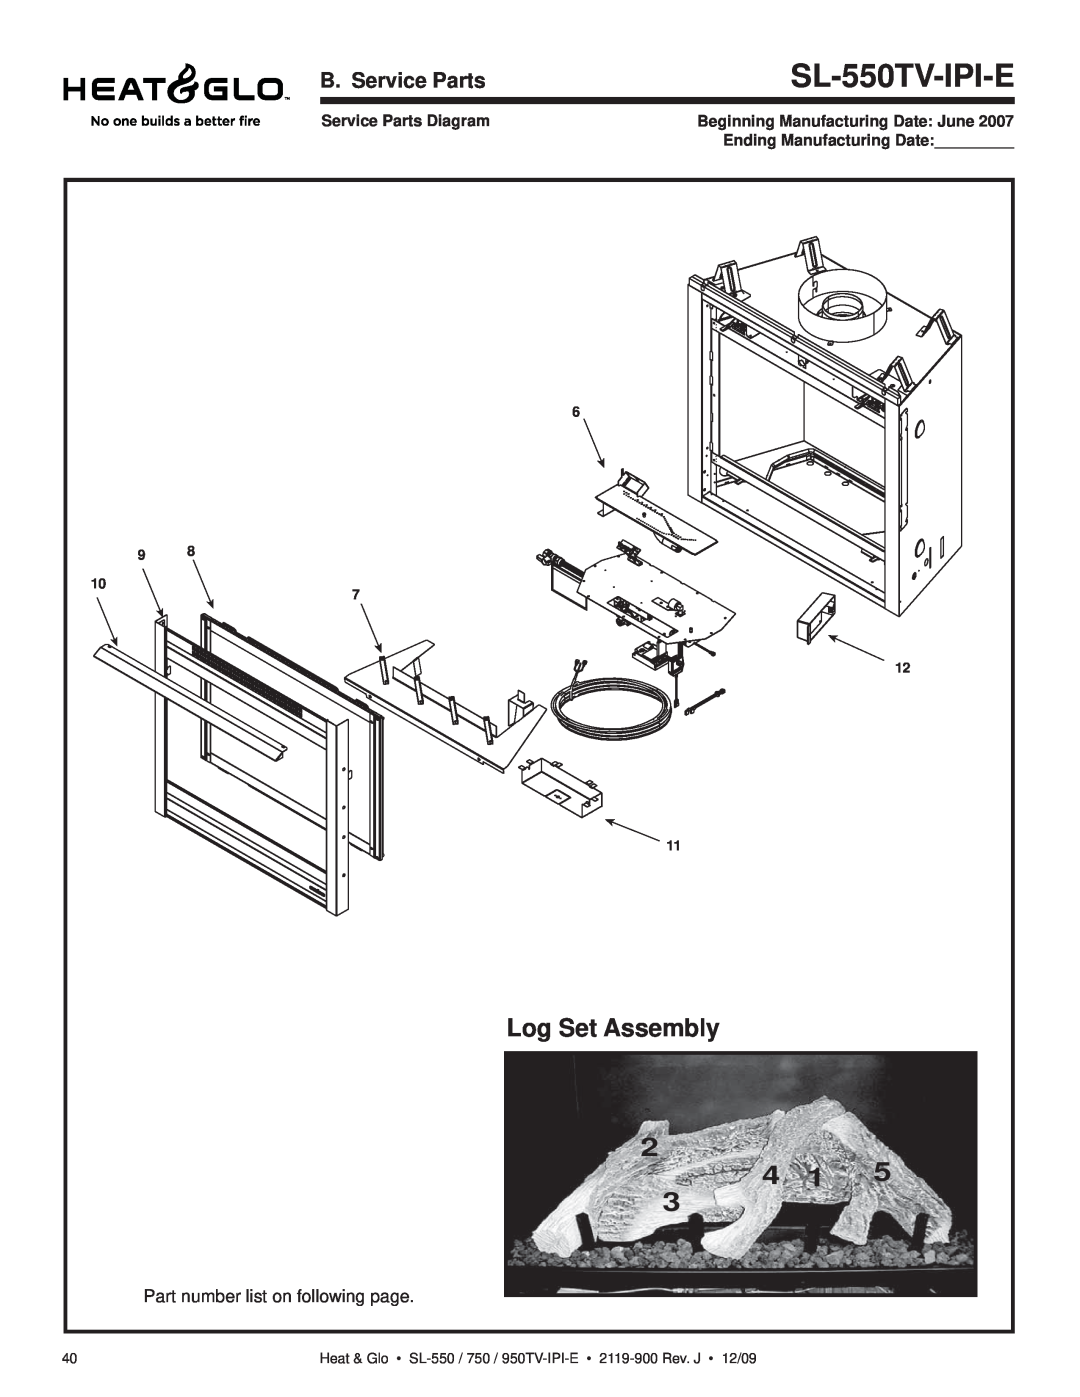 Heat & Glo LifeStyle SL-750TV-IPI-E owner manual SL-550TV-IPI-E, Log Set Assembly, B. Service Parts, Service Parts Diagram 